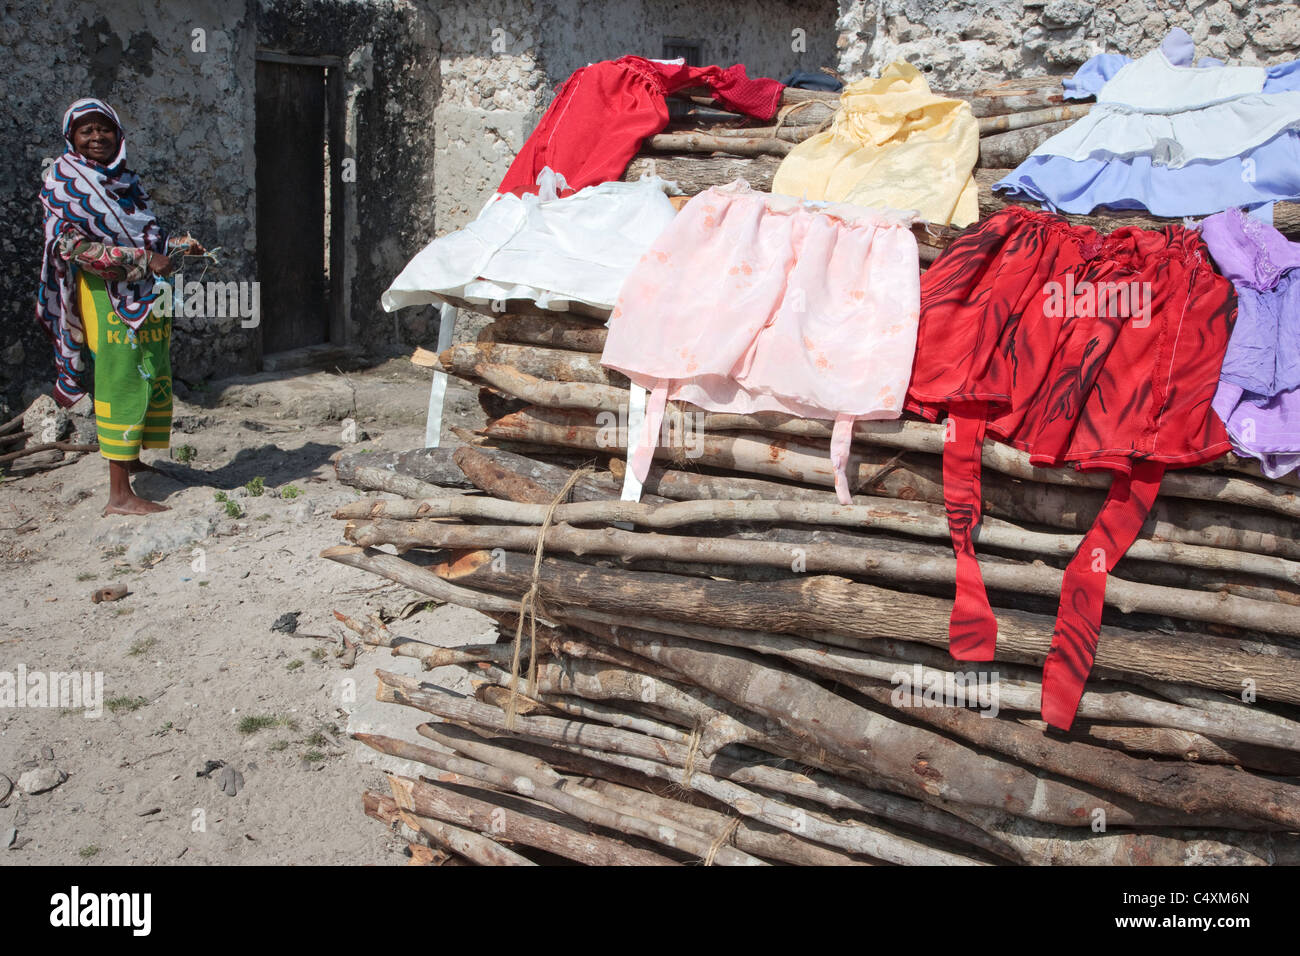 Clothing hanging out to dry, Chwaka village, Zanzibar, Tanzania Stock Photo